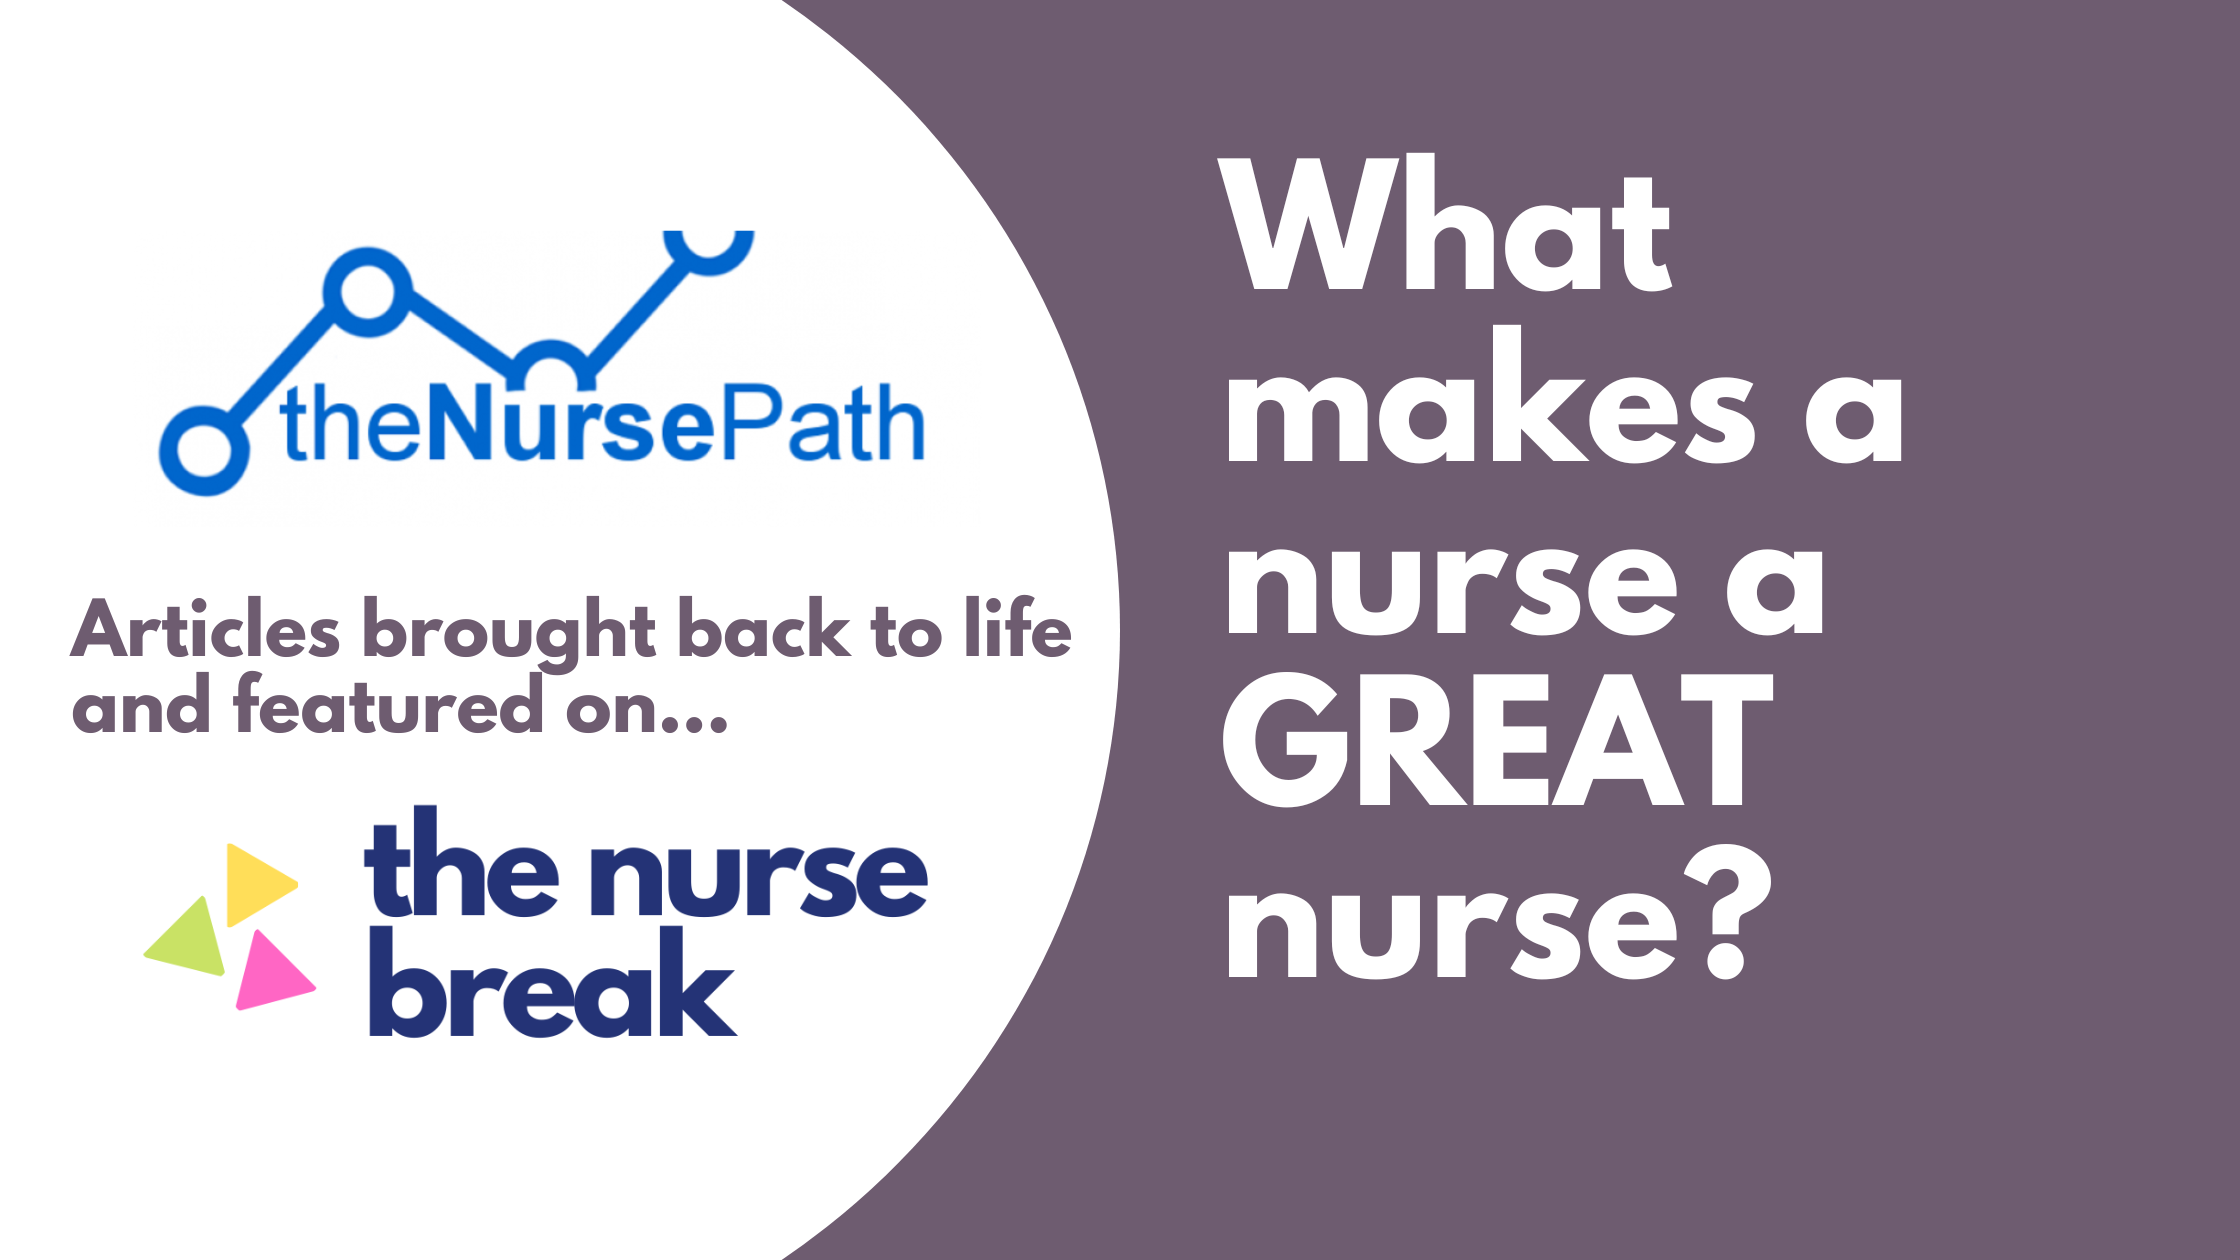 What makes a nurse a GREAT nurse?